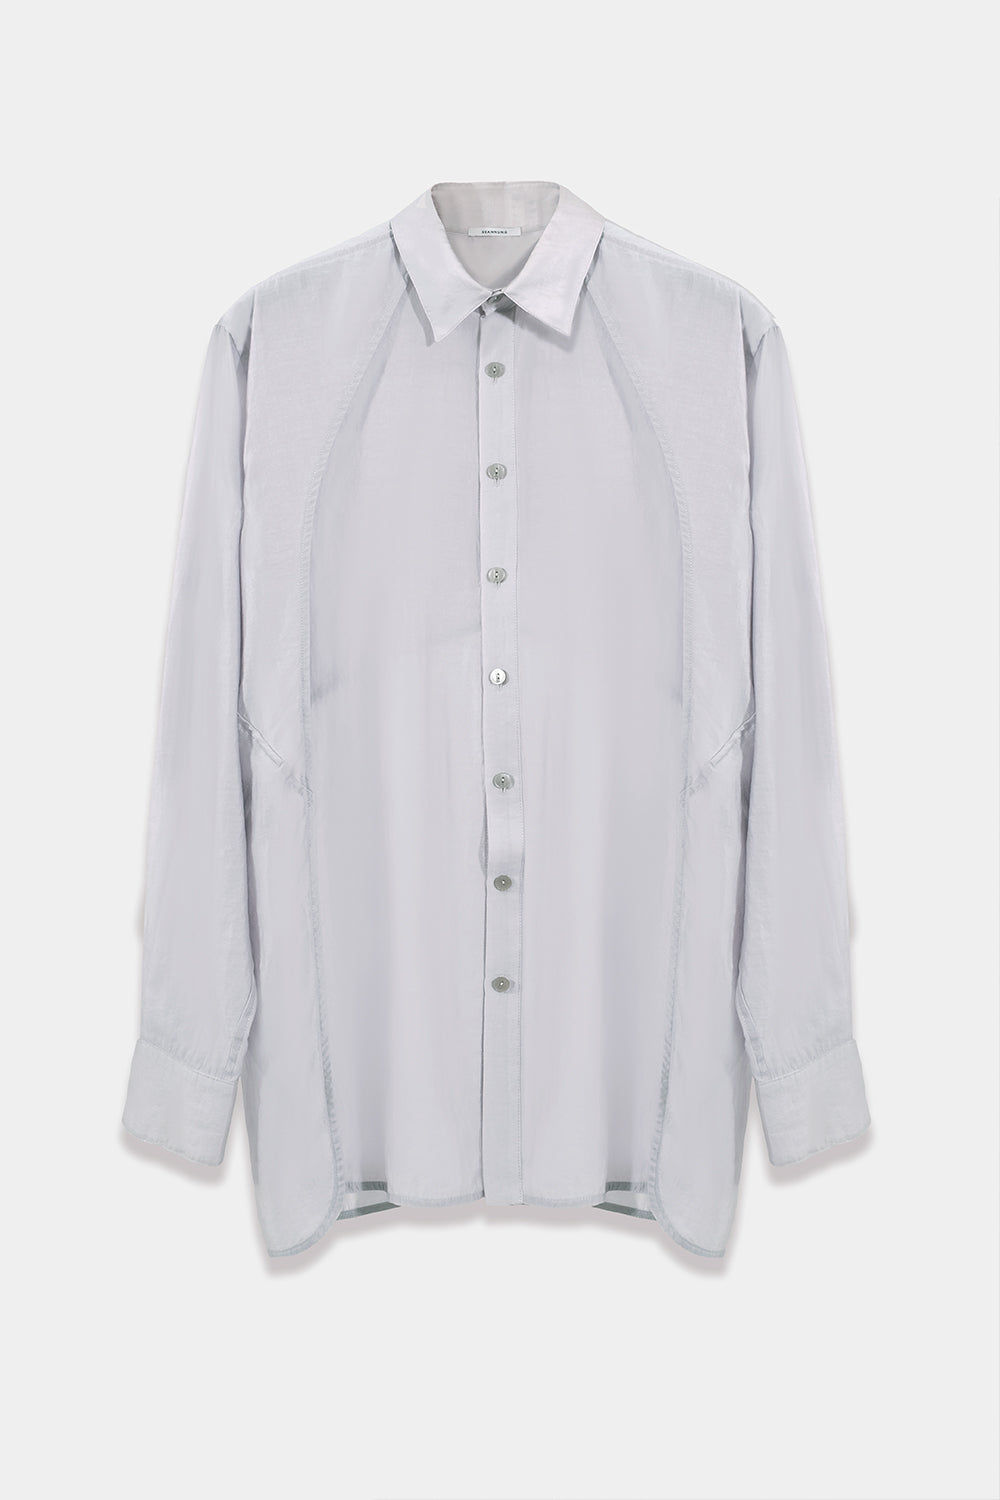 SEANNUNG - MEN - Double Layered Transparent Shoulder Detail Shirt 透膚層次披肩襯衫